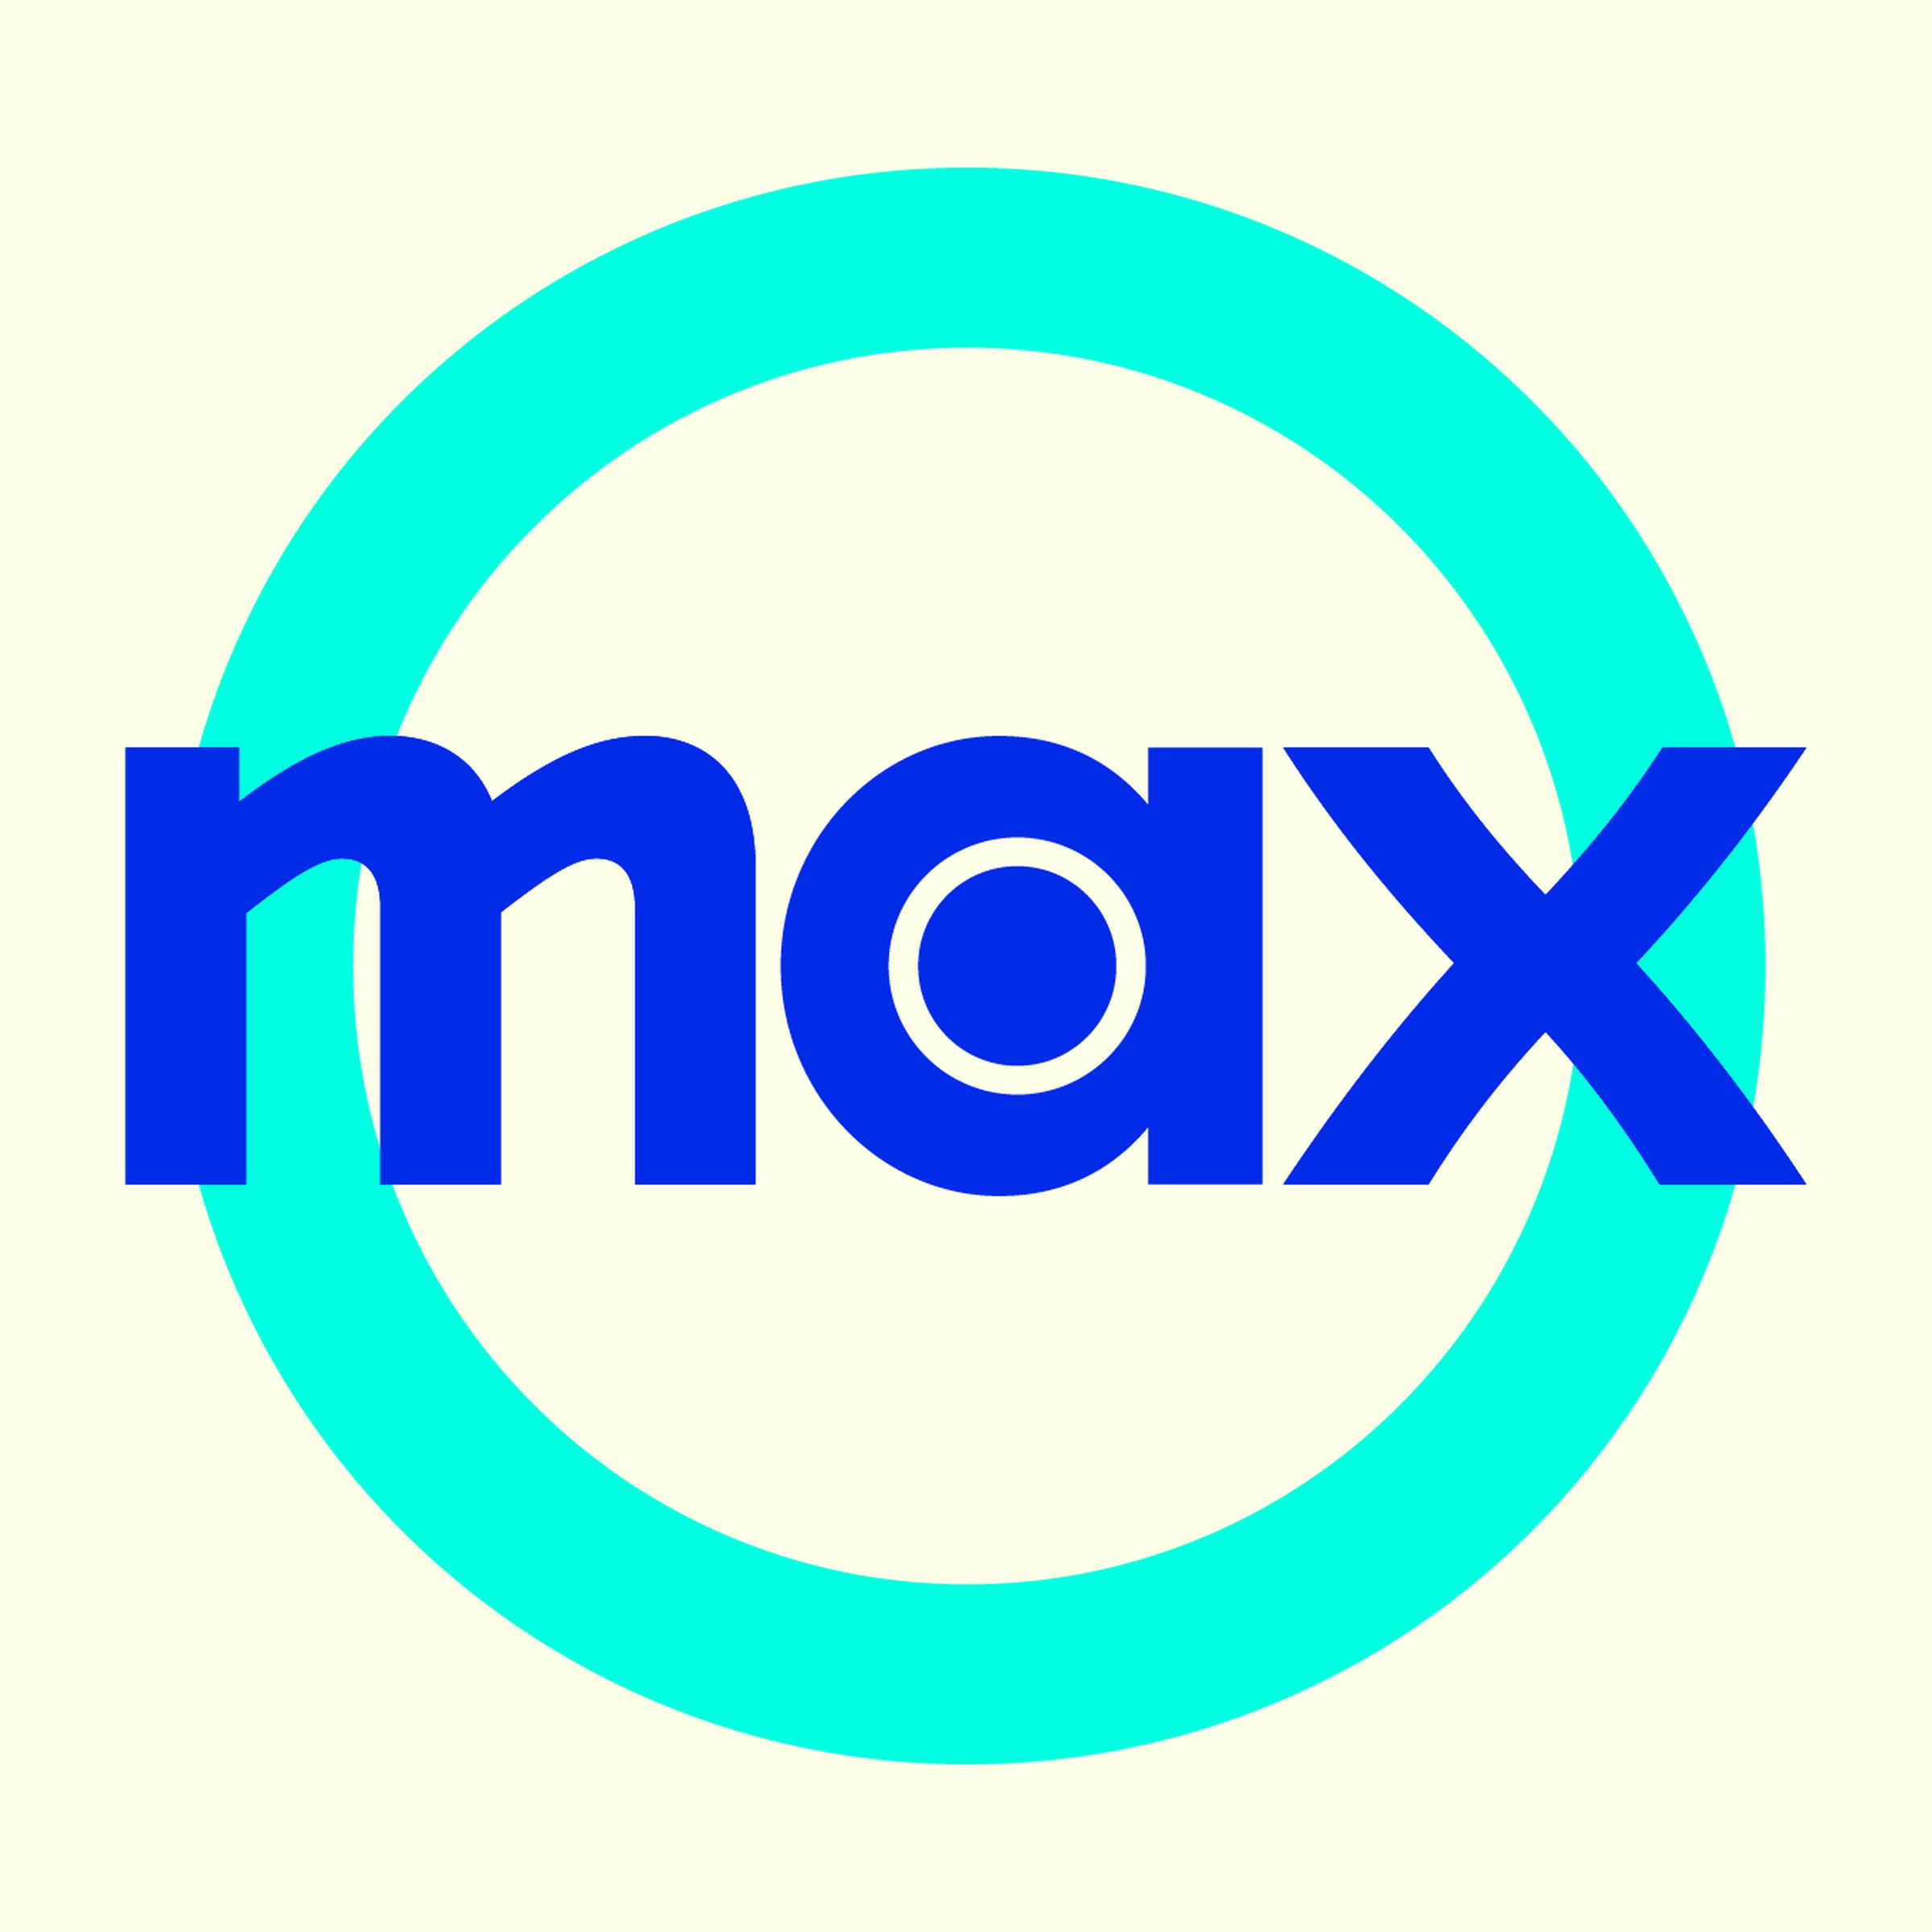 Vector illustration of the Max logo.